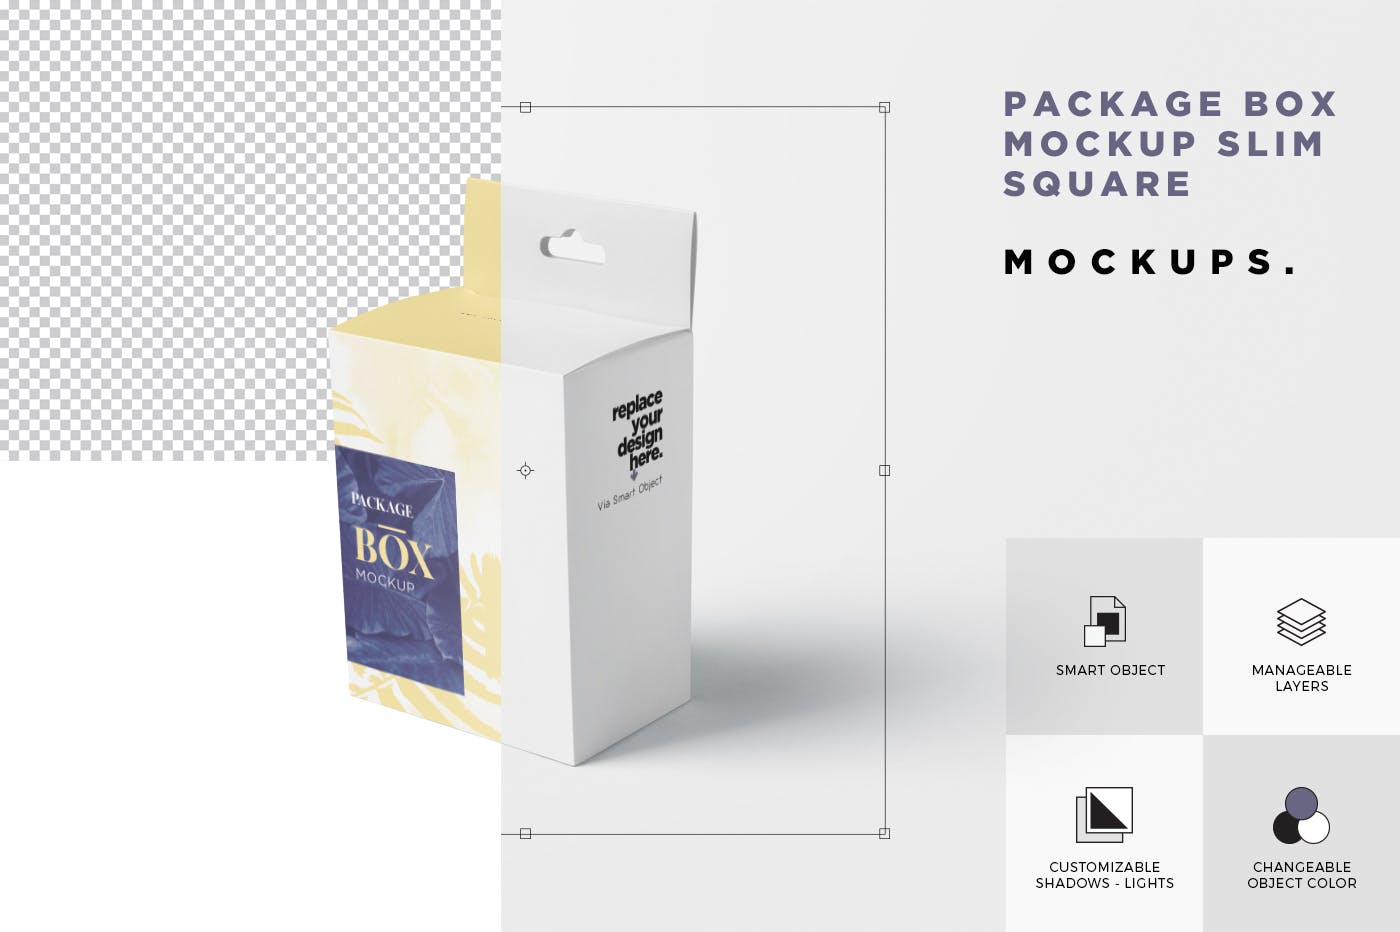 挂耳式扁平矩形包装盒素材库精选模板 Package Box Mockup Set – Slim Square with Hanger插图(6)